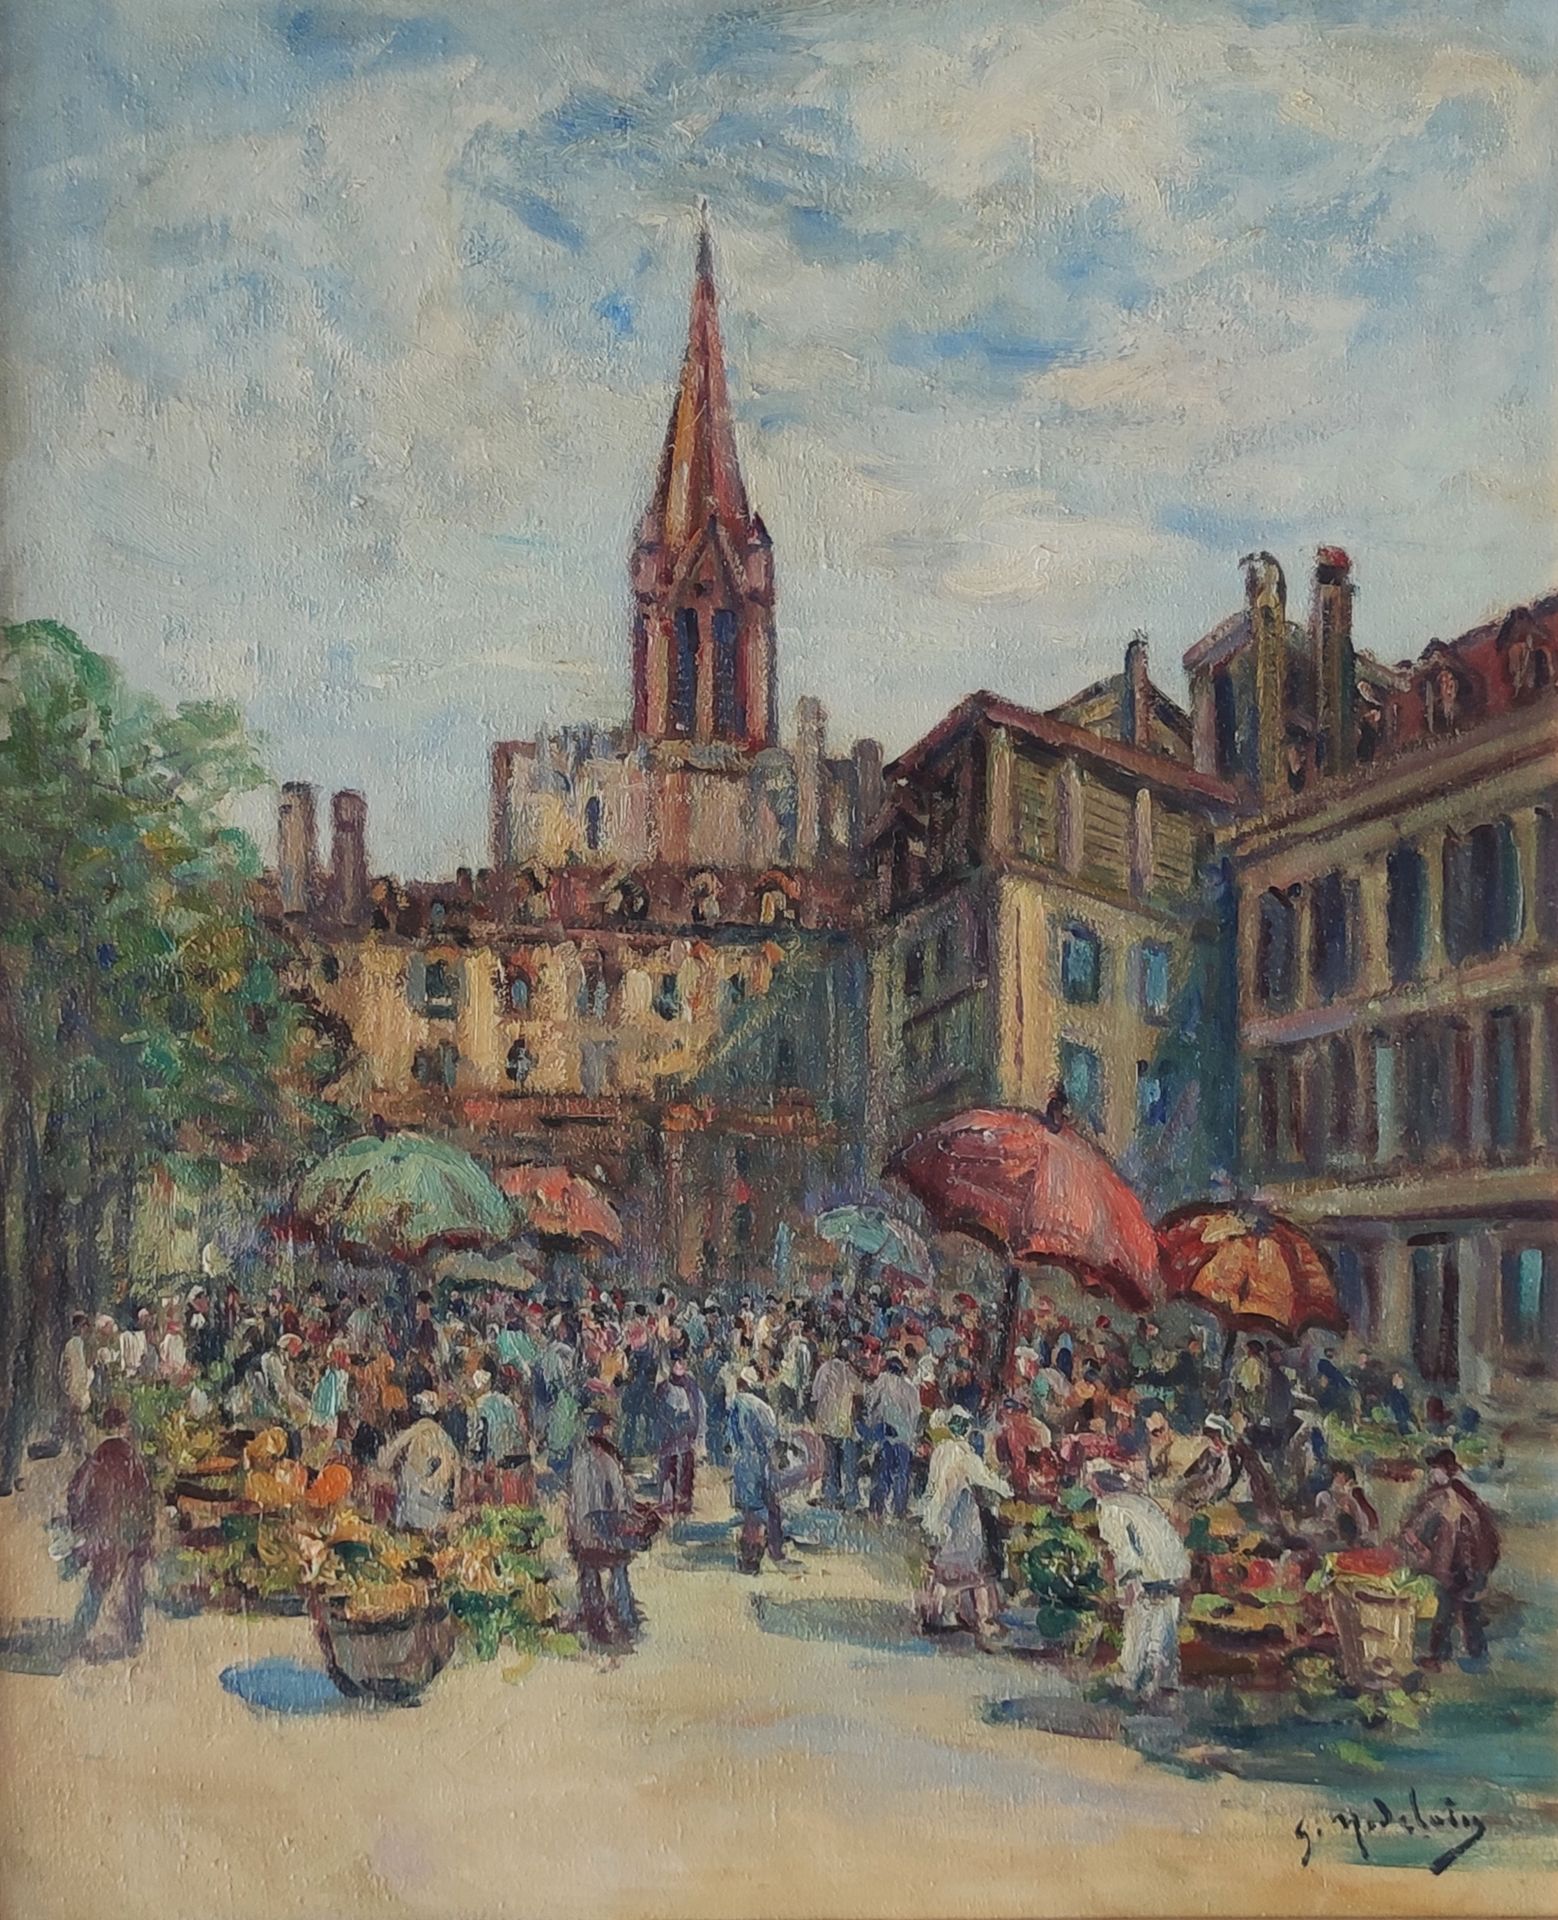 Null 古斯塔夫-马德兰(1867-1944)

斯特拉斯堡热闹的市场

布面油画，右下角有签名

73 x 60厘米